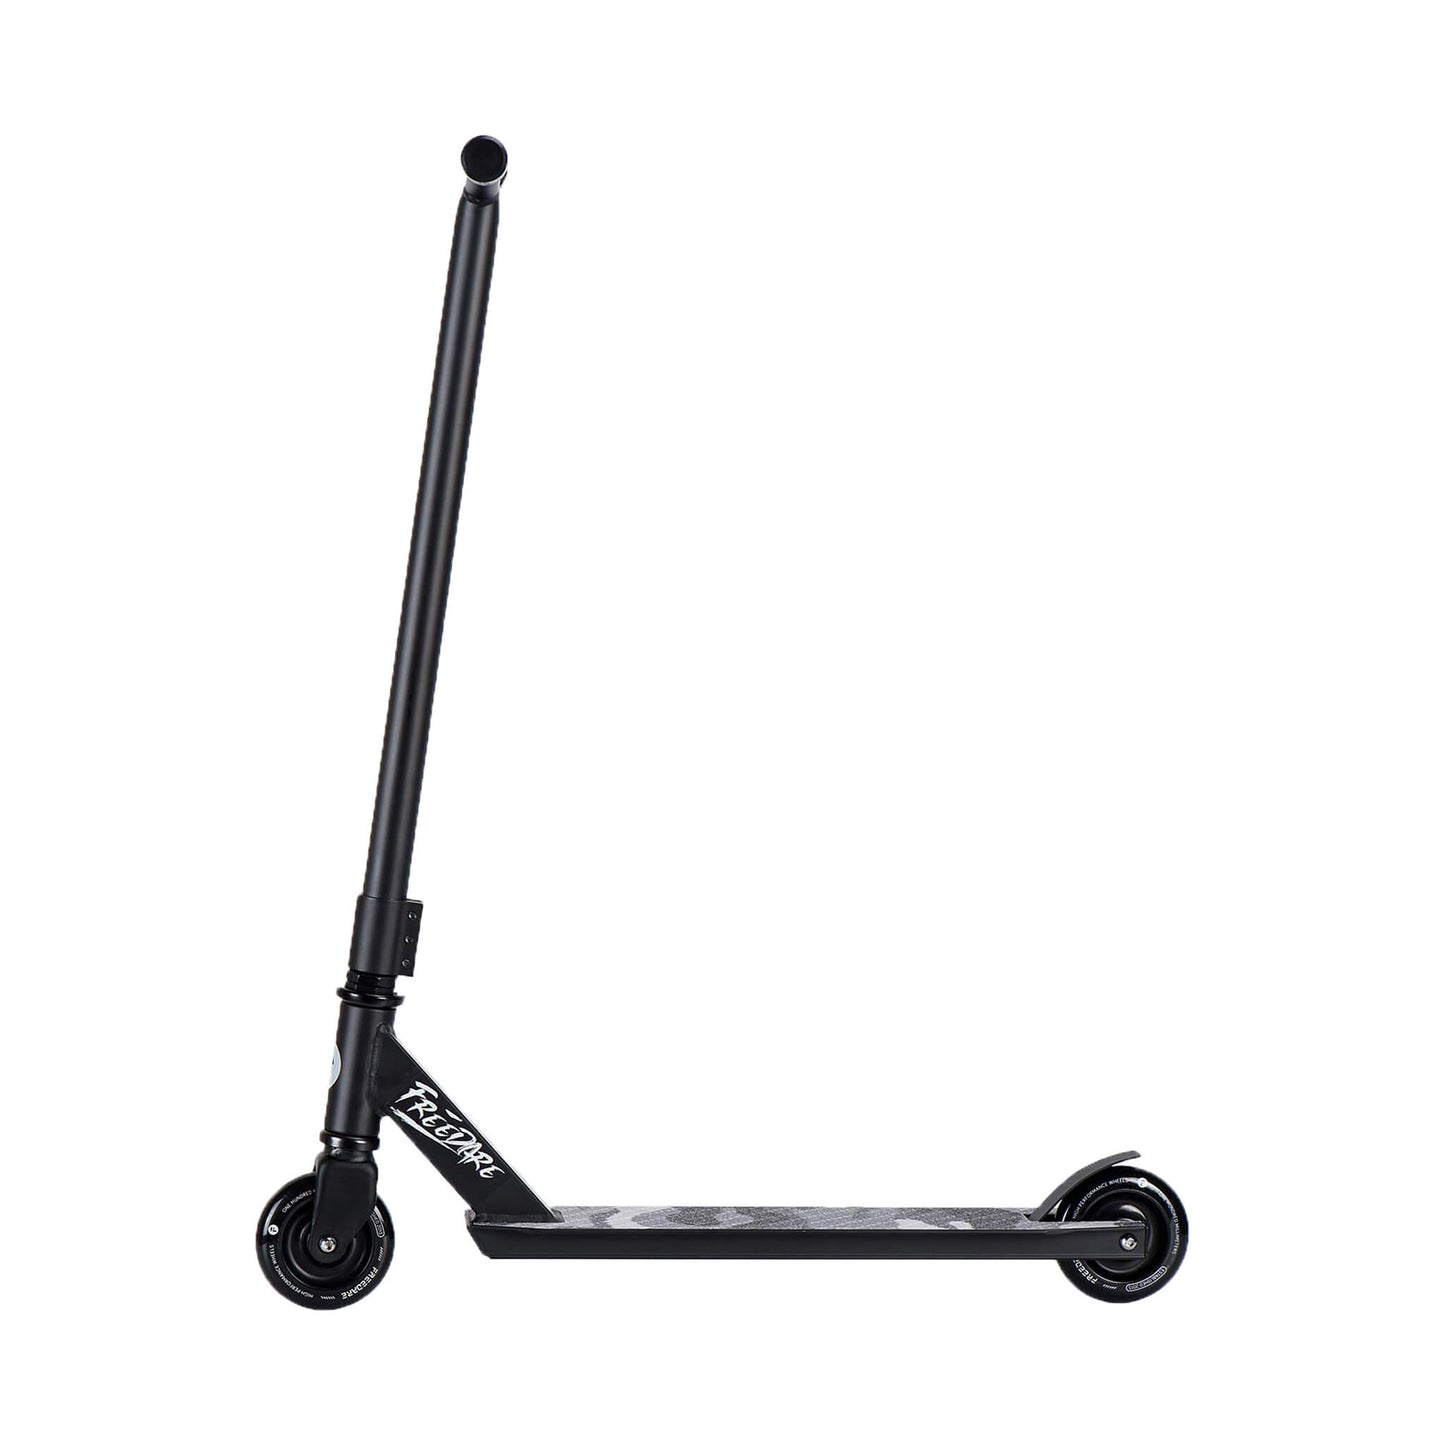 On Big Sale】Freedare JB-1 scooter complete(Black) –